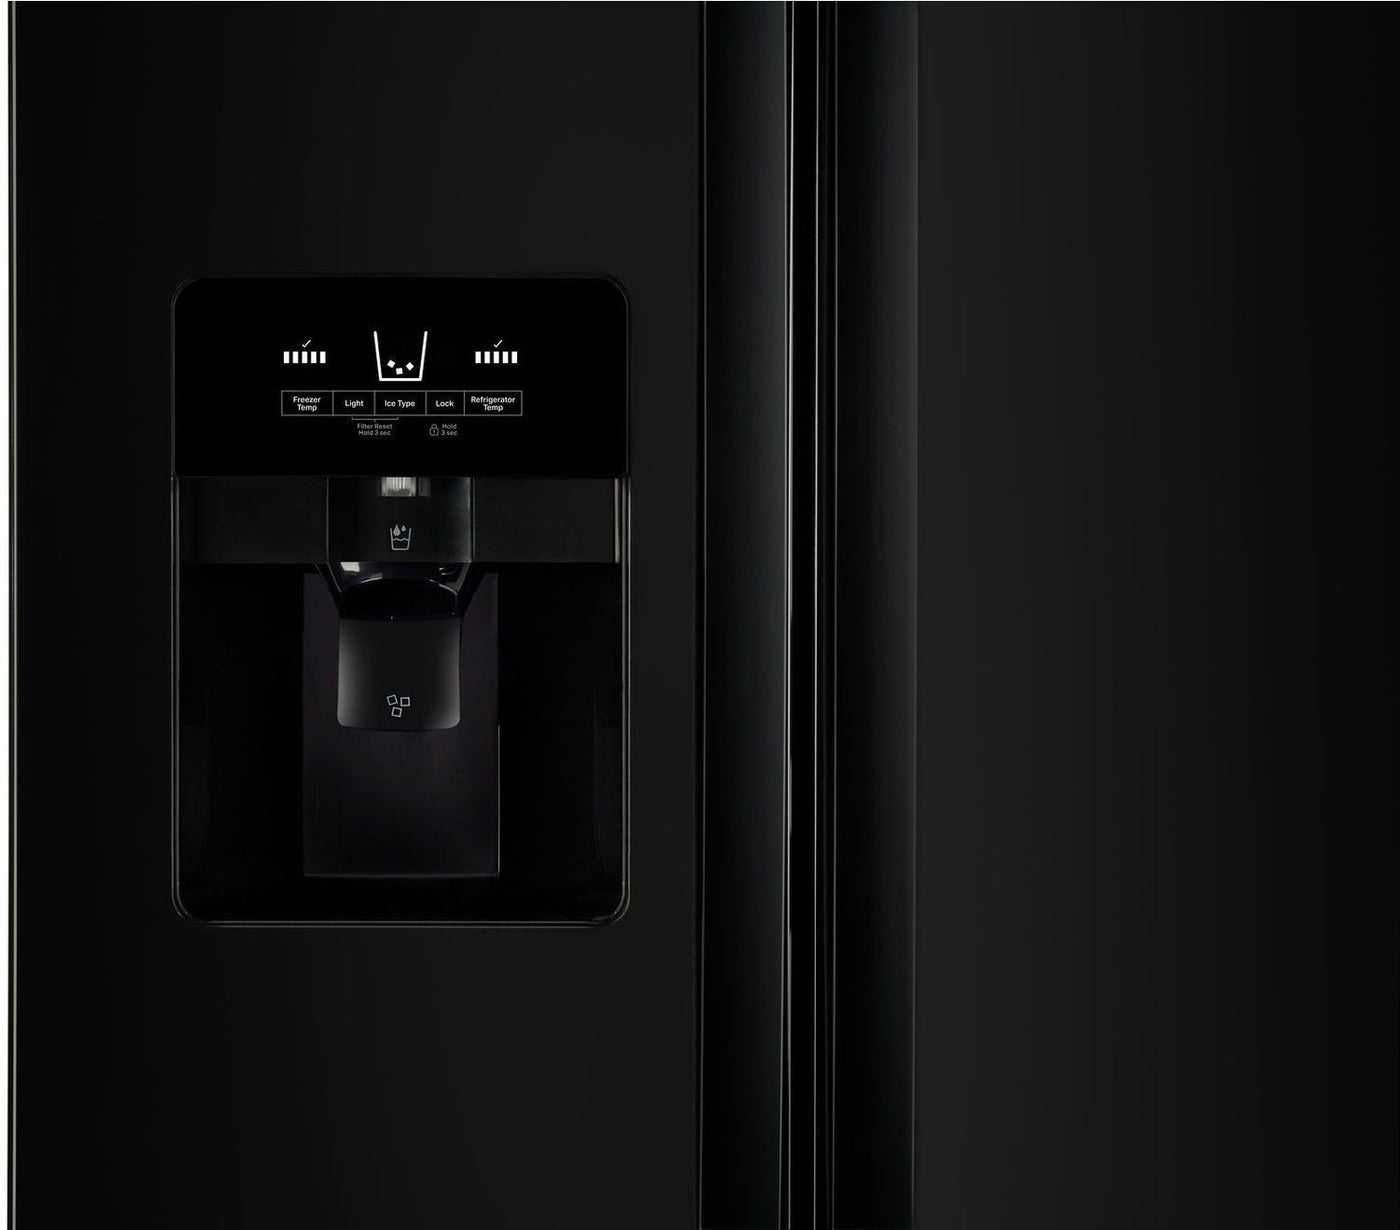 Whirlpool Black Side-by-Side Refrigerator (25 Cu. Ft.) - WRS335SDHB